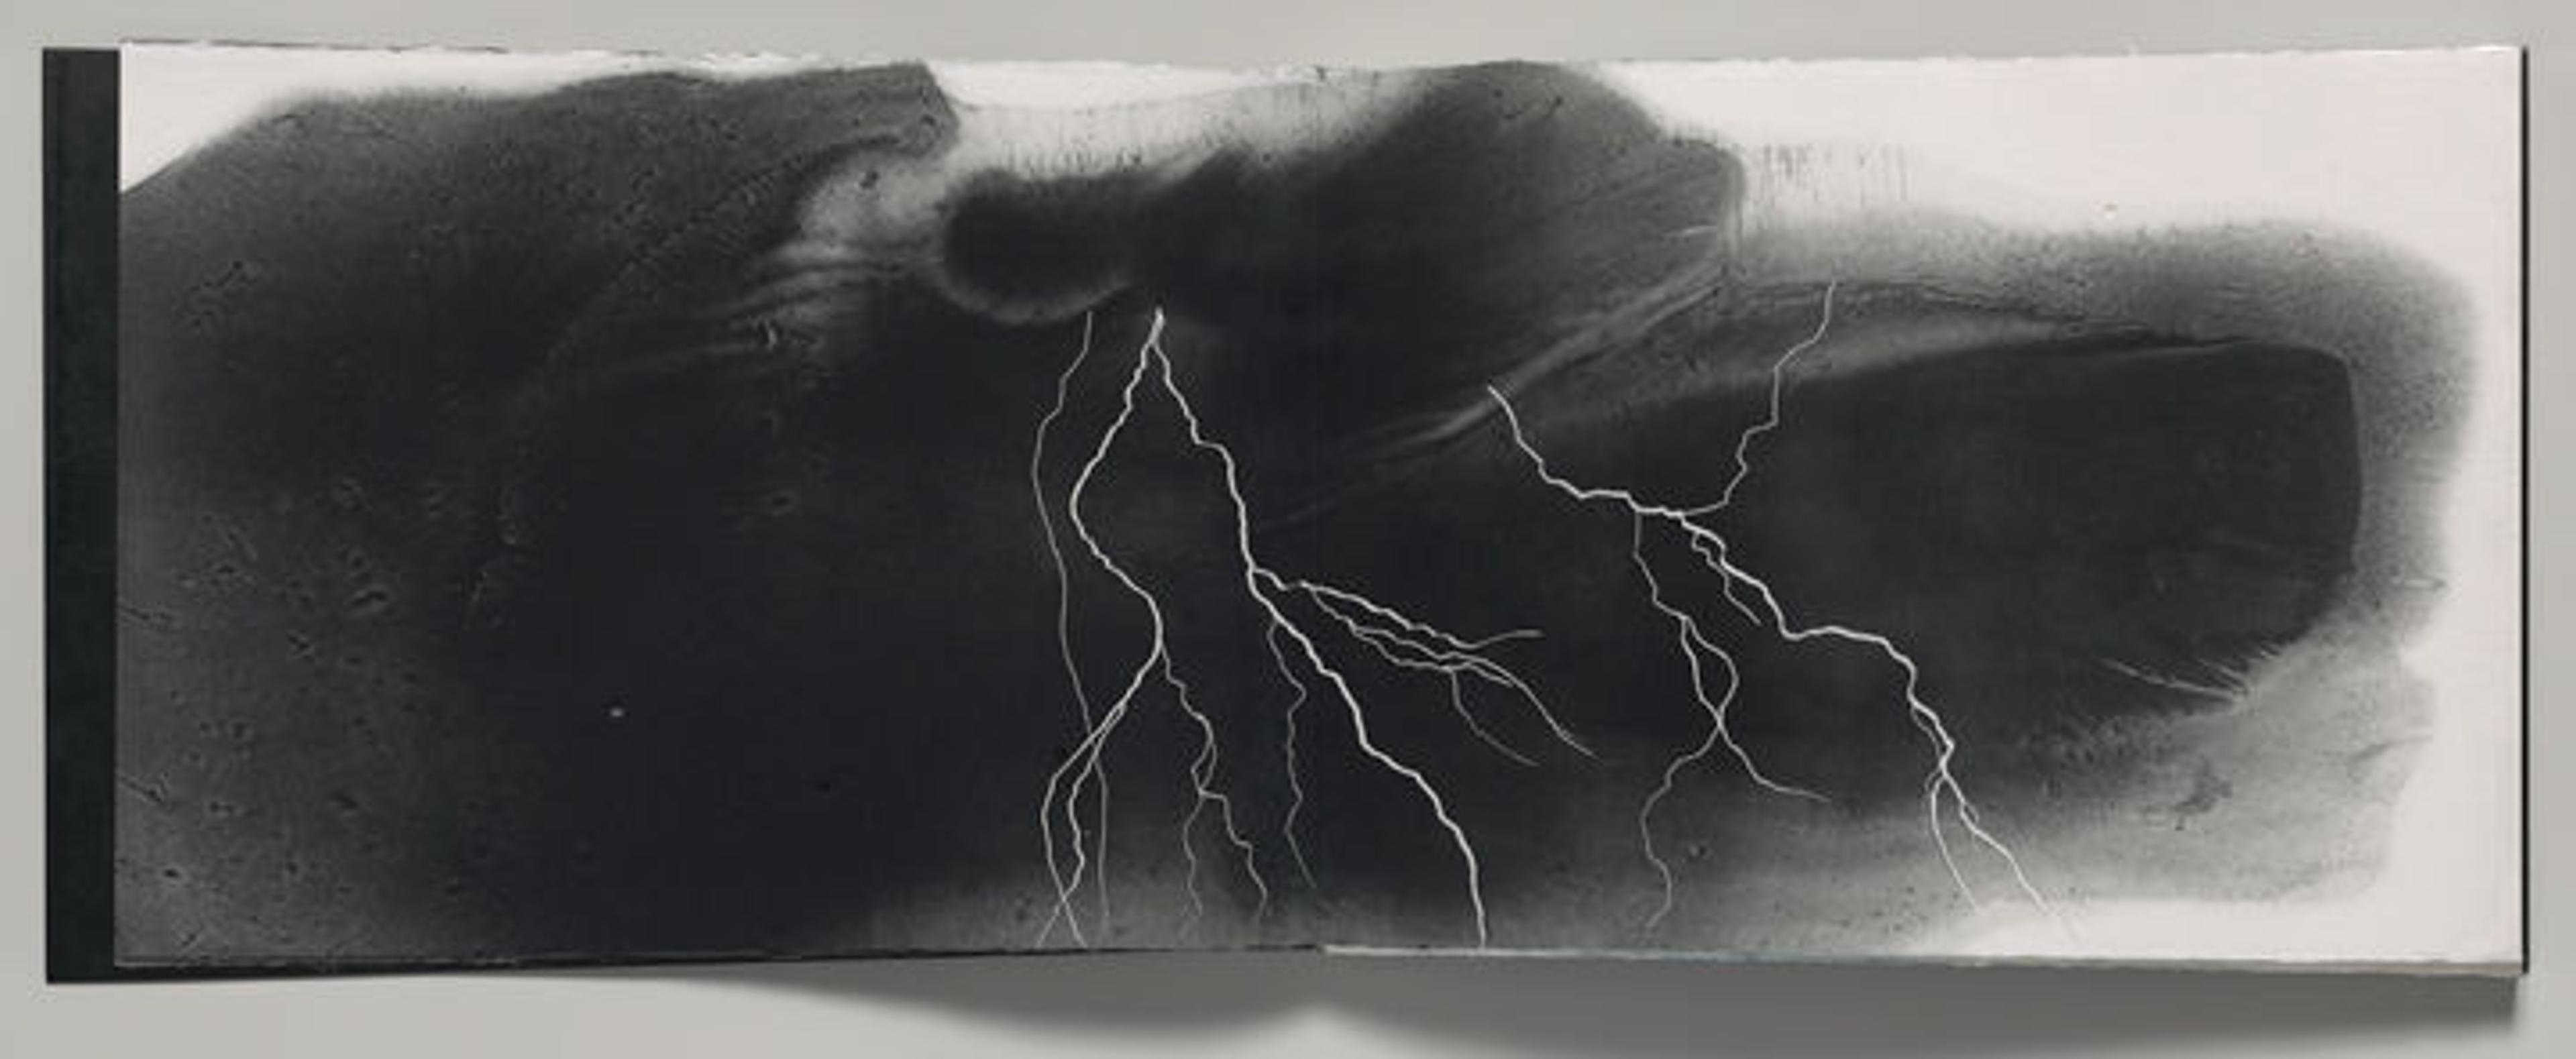 Page spread from Ranjani Shettar's artist book 'Varsha' depicting an ominously dark sky and lightning strikes